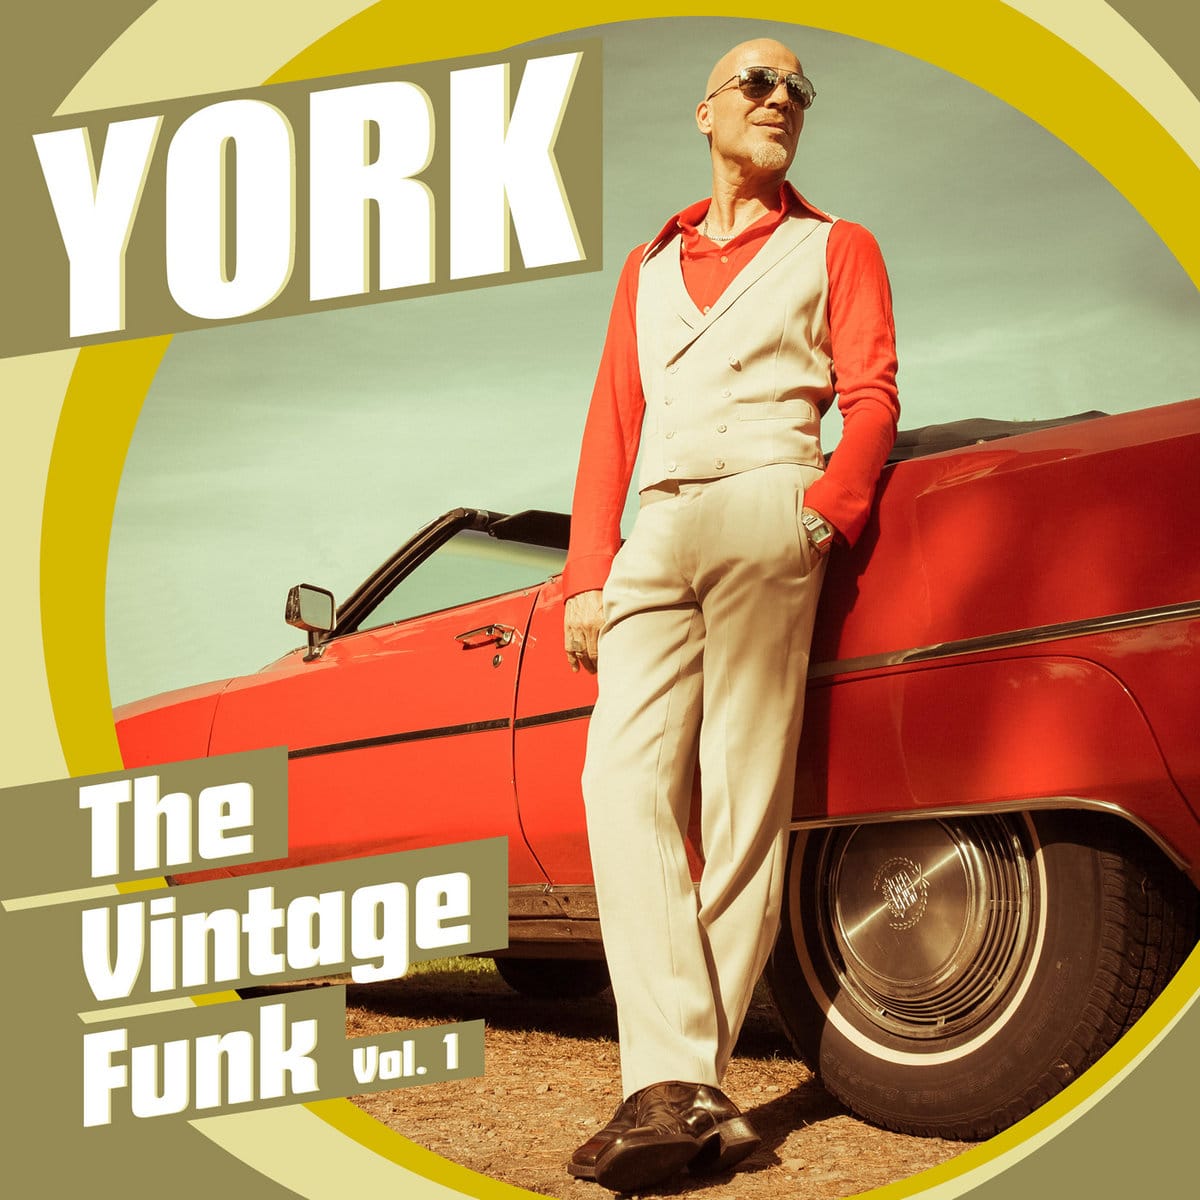 YORK - The Vintage Funk Vol.1